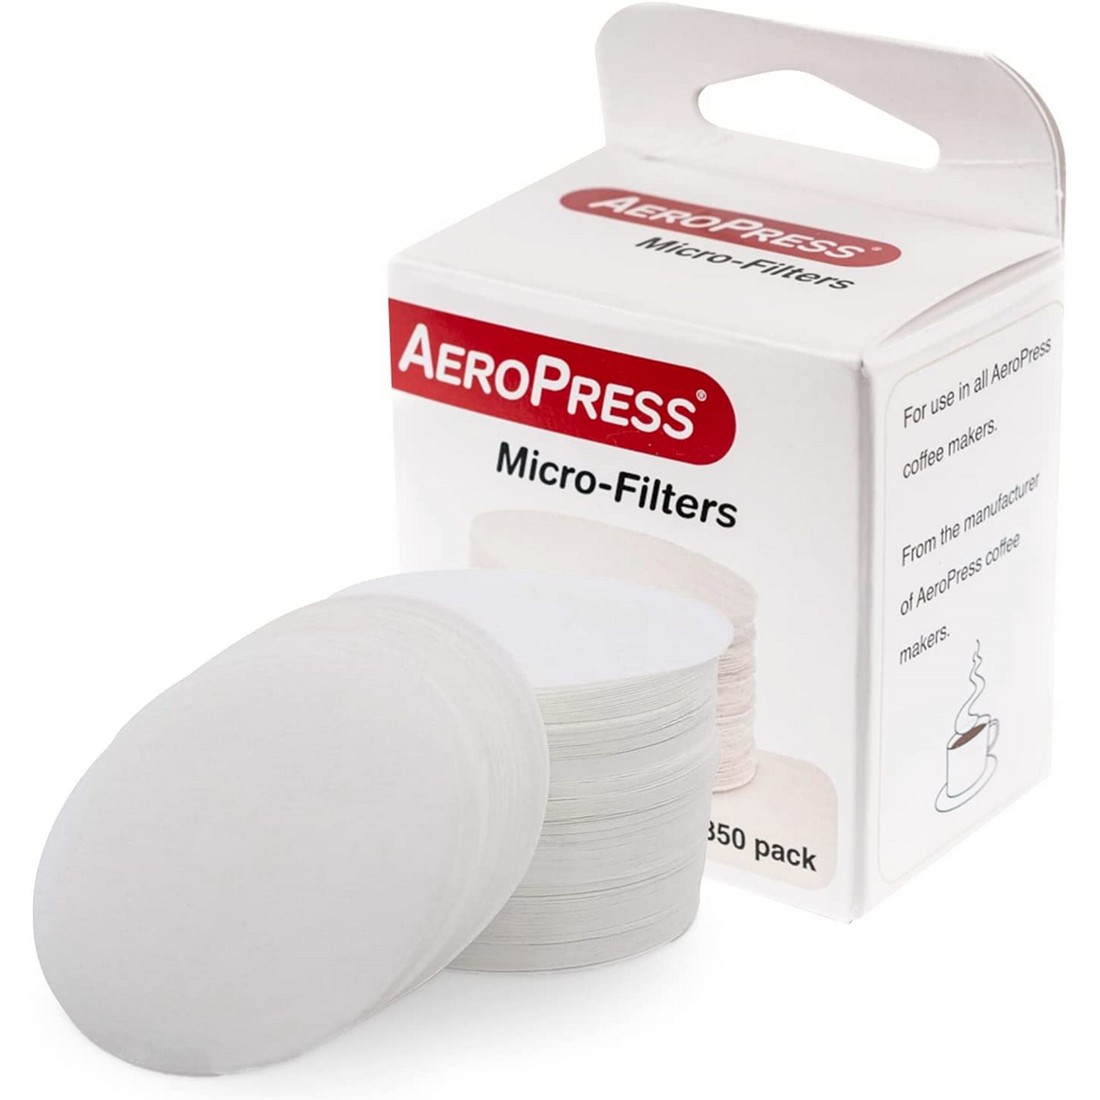 AeroPress - Replacement Filters - 350 pcs